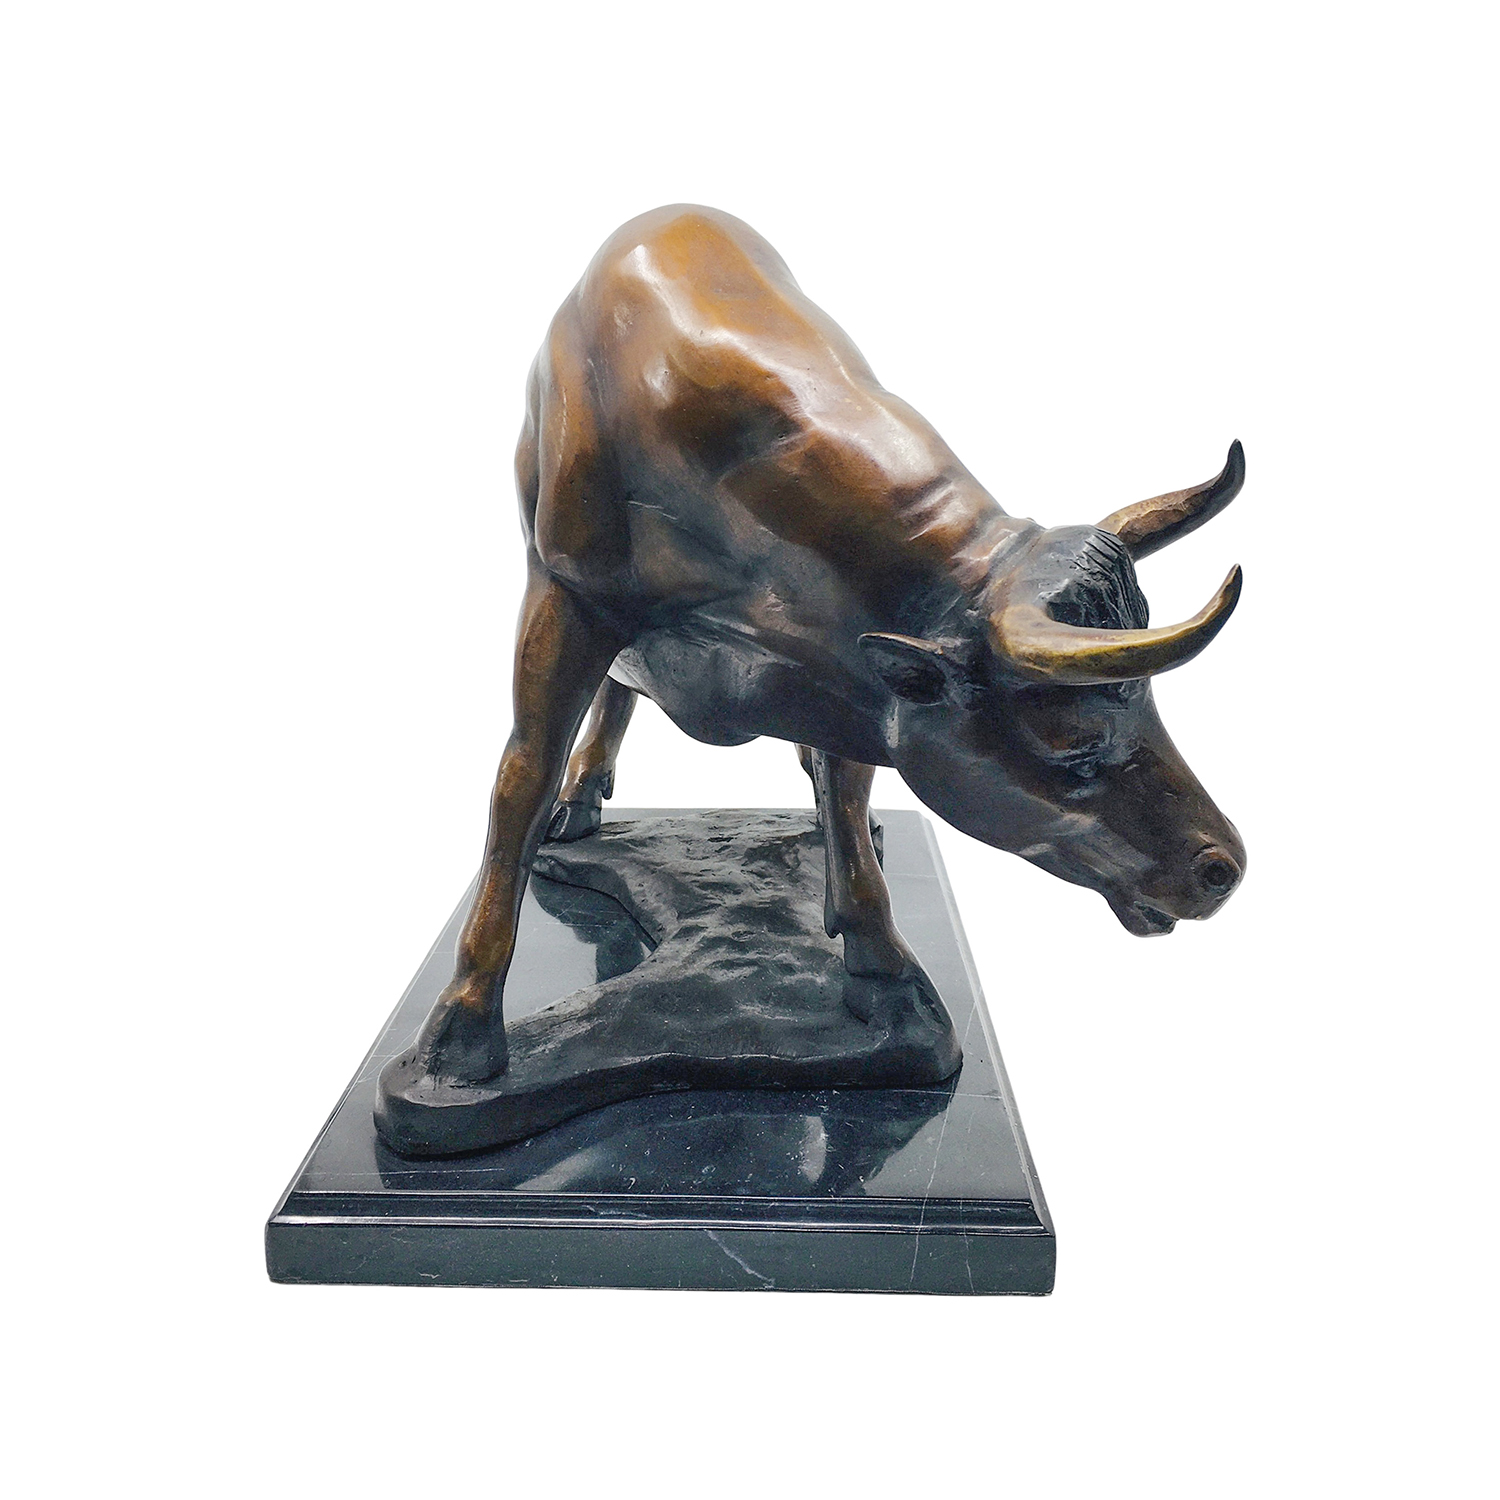 Charging Bull Desk Statue